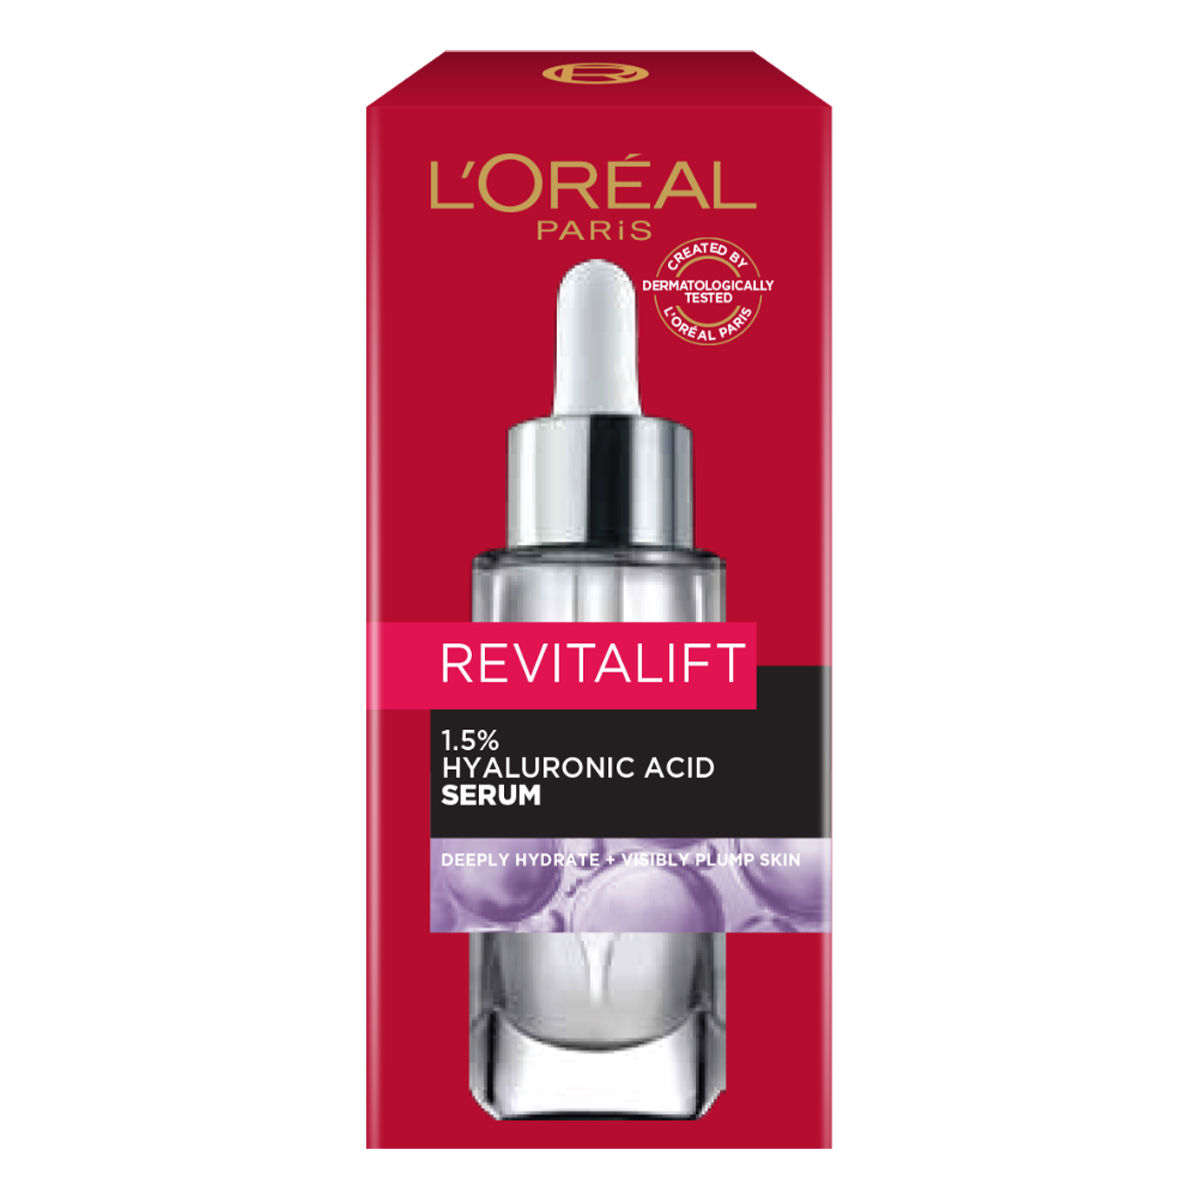 Buy Loreal Paris Revitalift 1.5% Hyaluronic Acid Face Serum, 15 ml Online